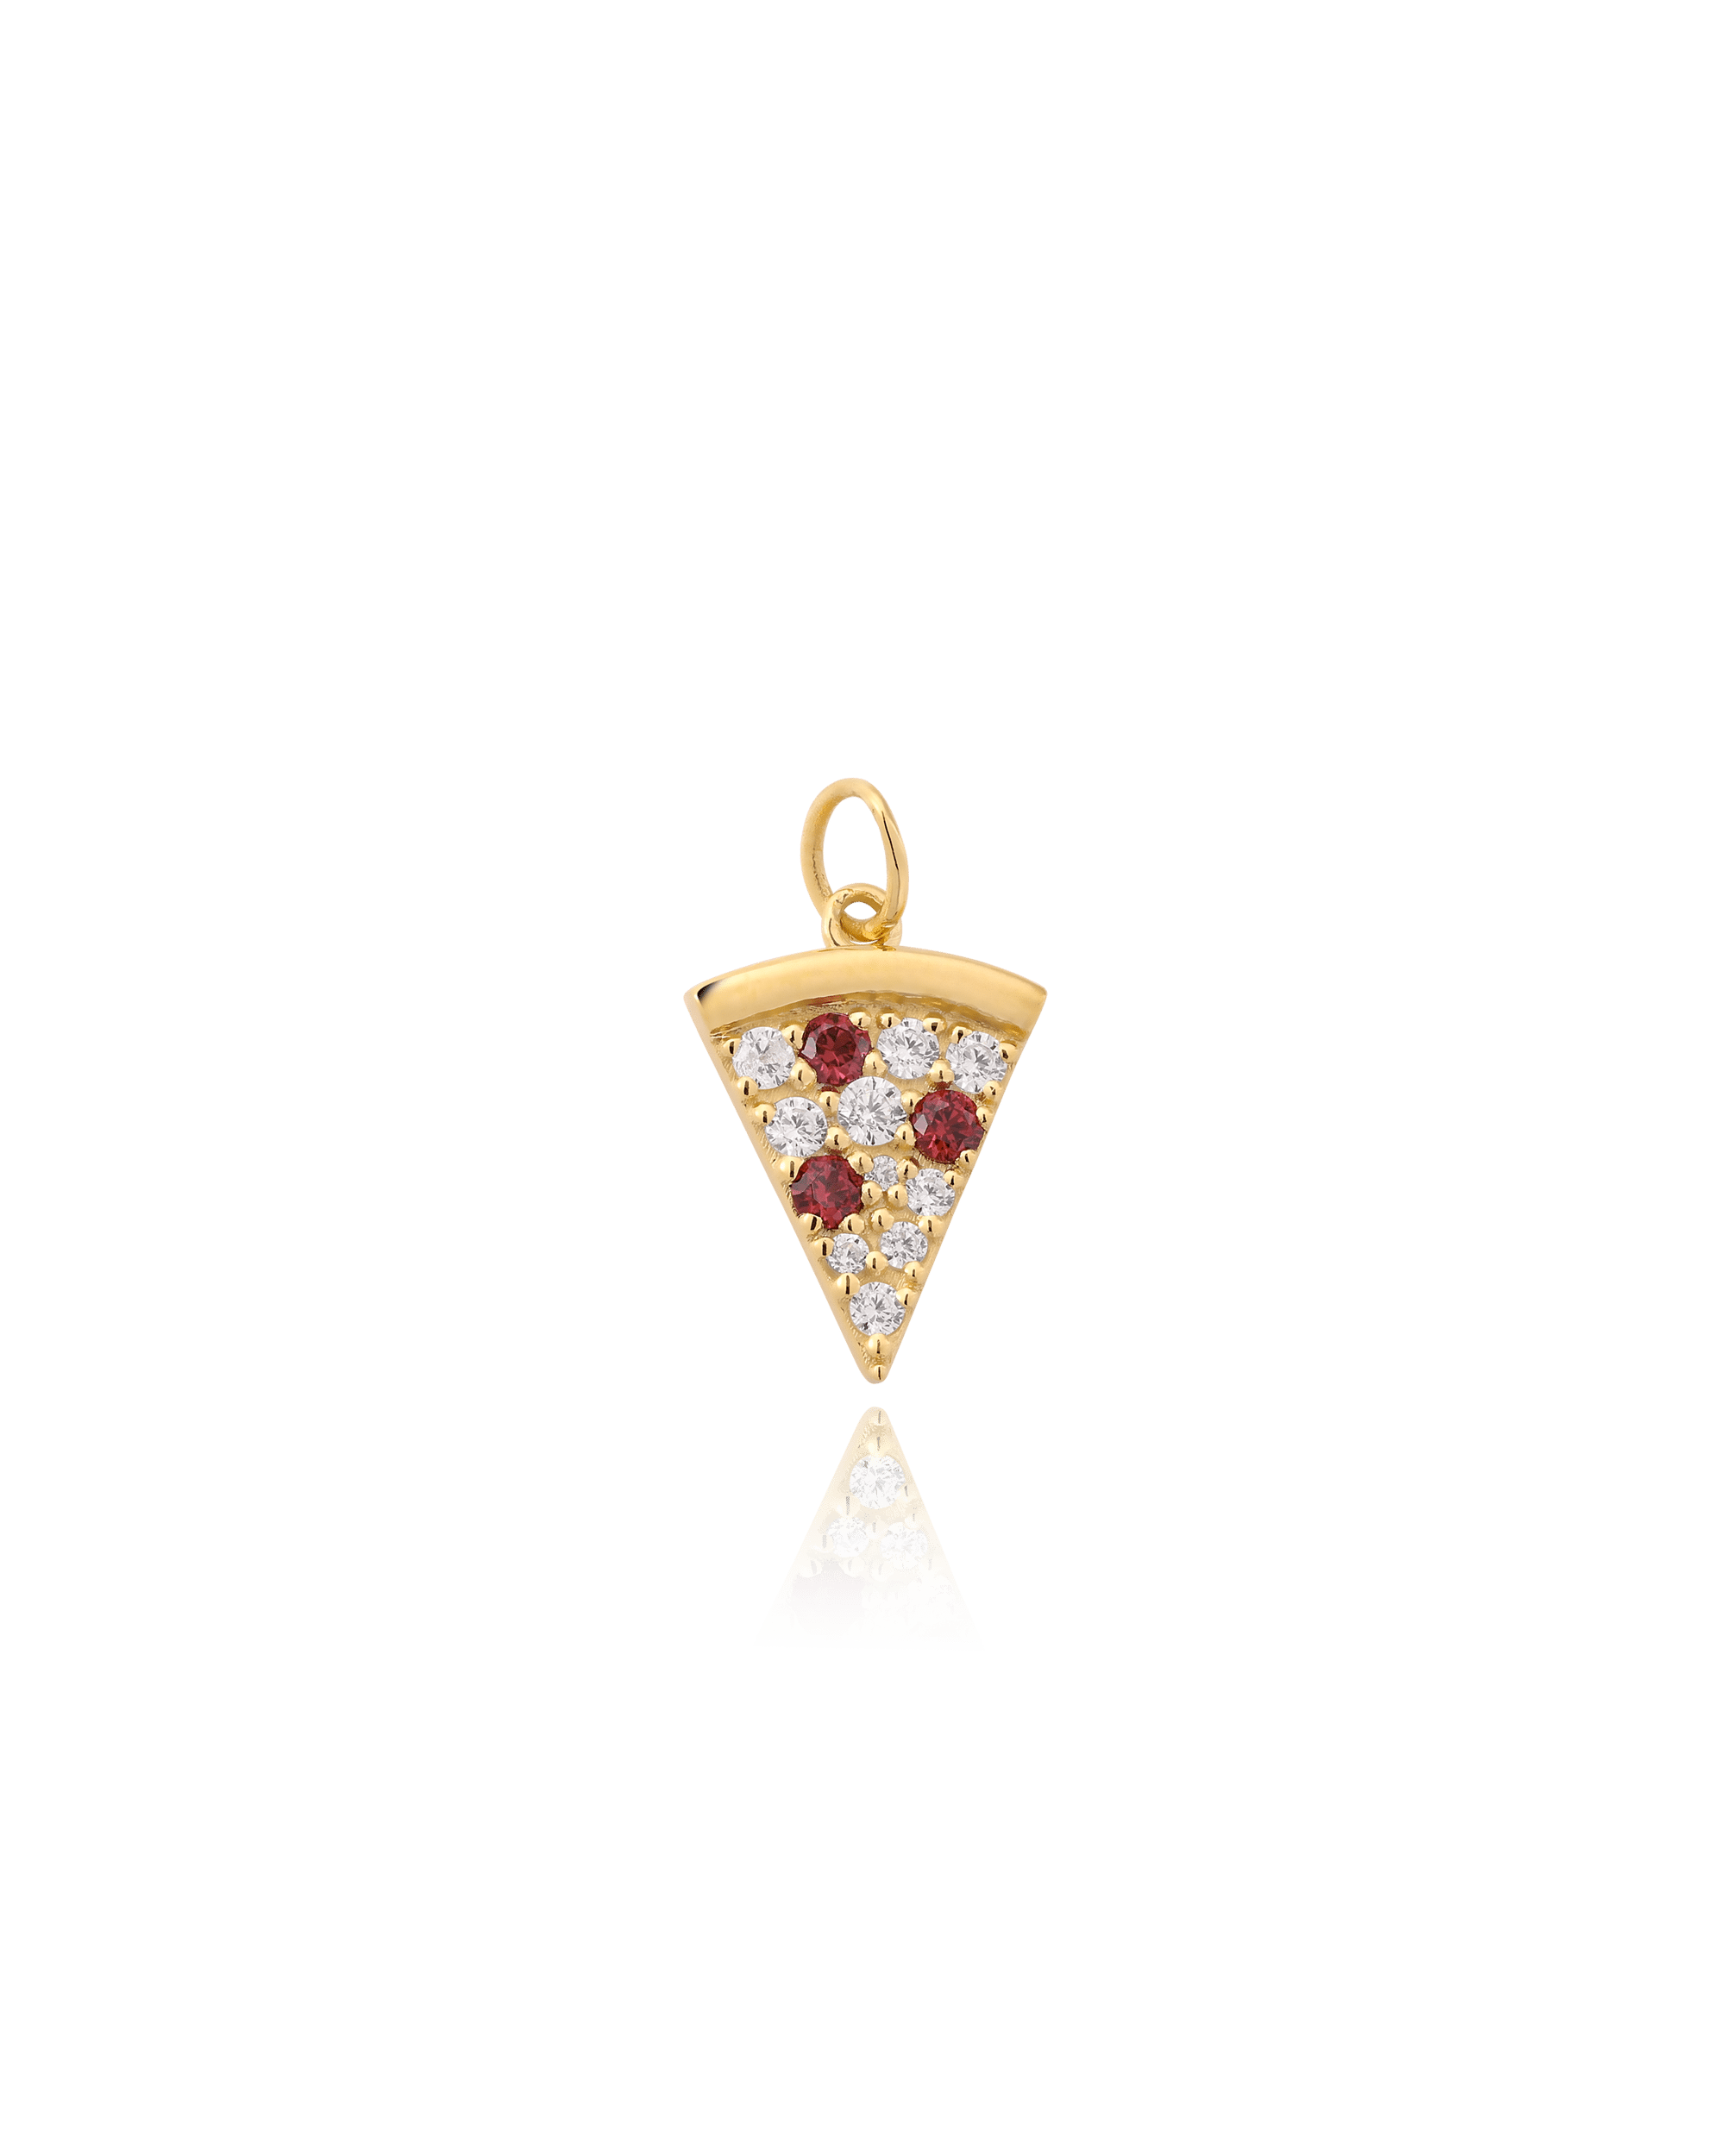 Pizza Charm - 18K Gold Vermeil Charm magal-dev No 